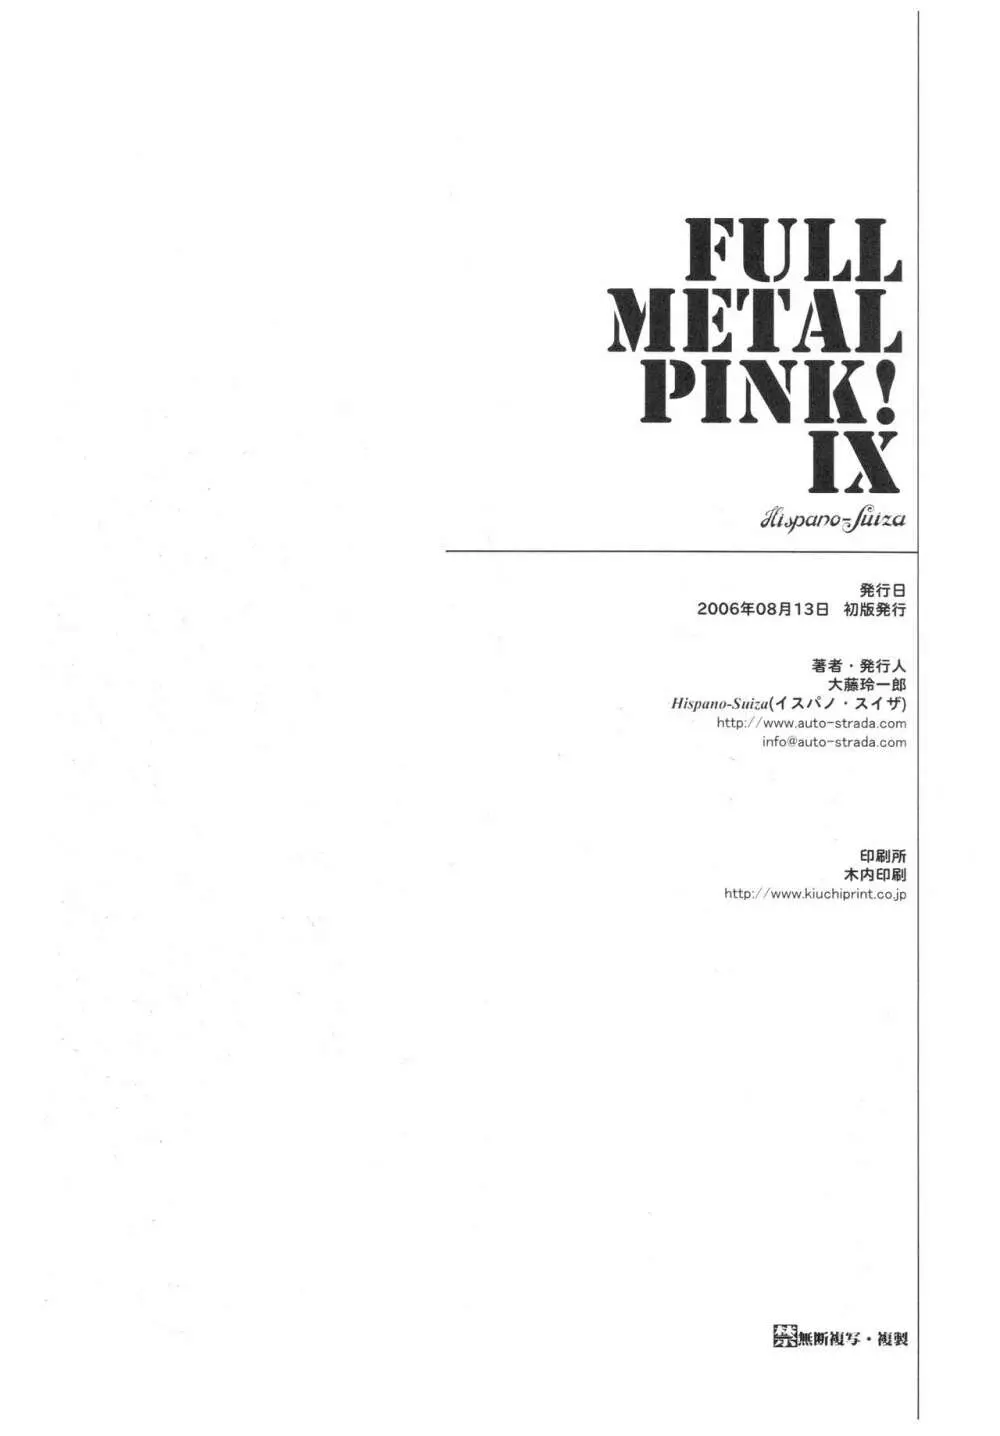 Full Metal Pink! IX 2ページ